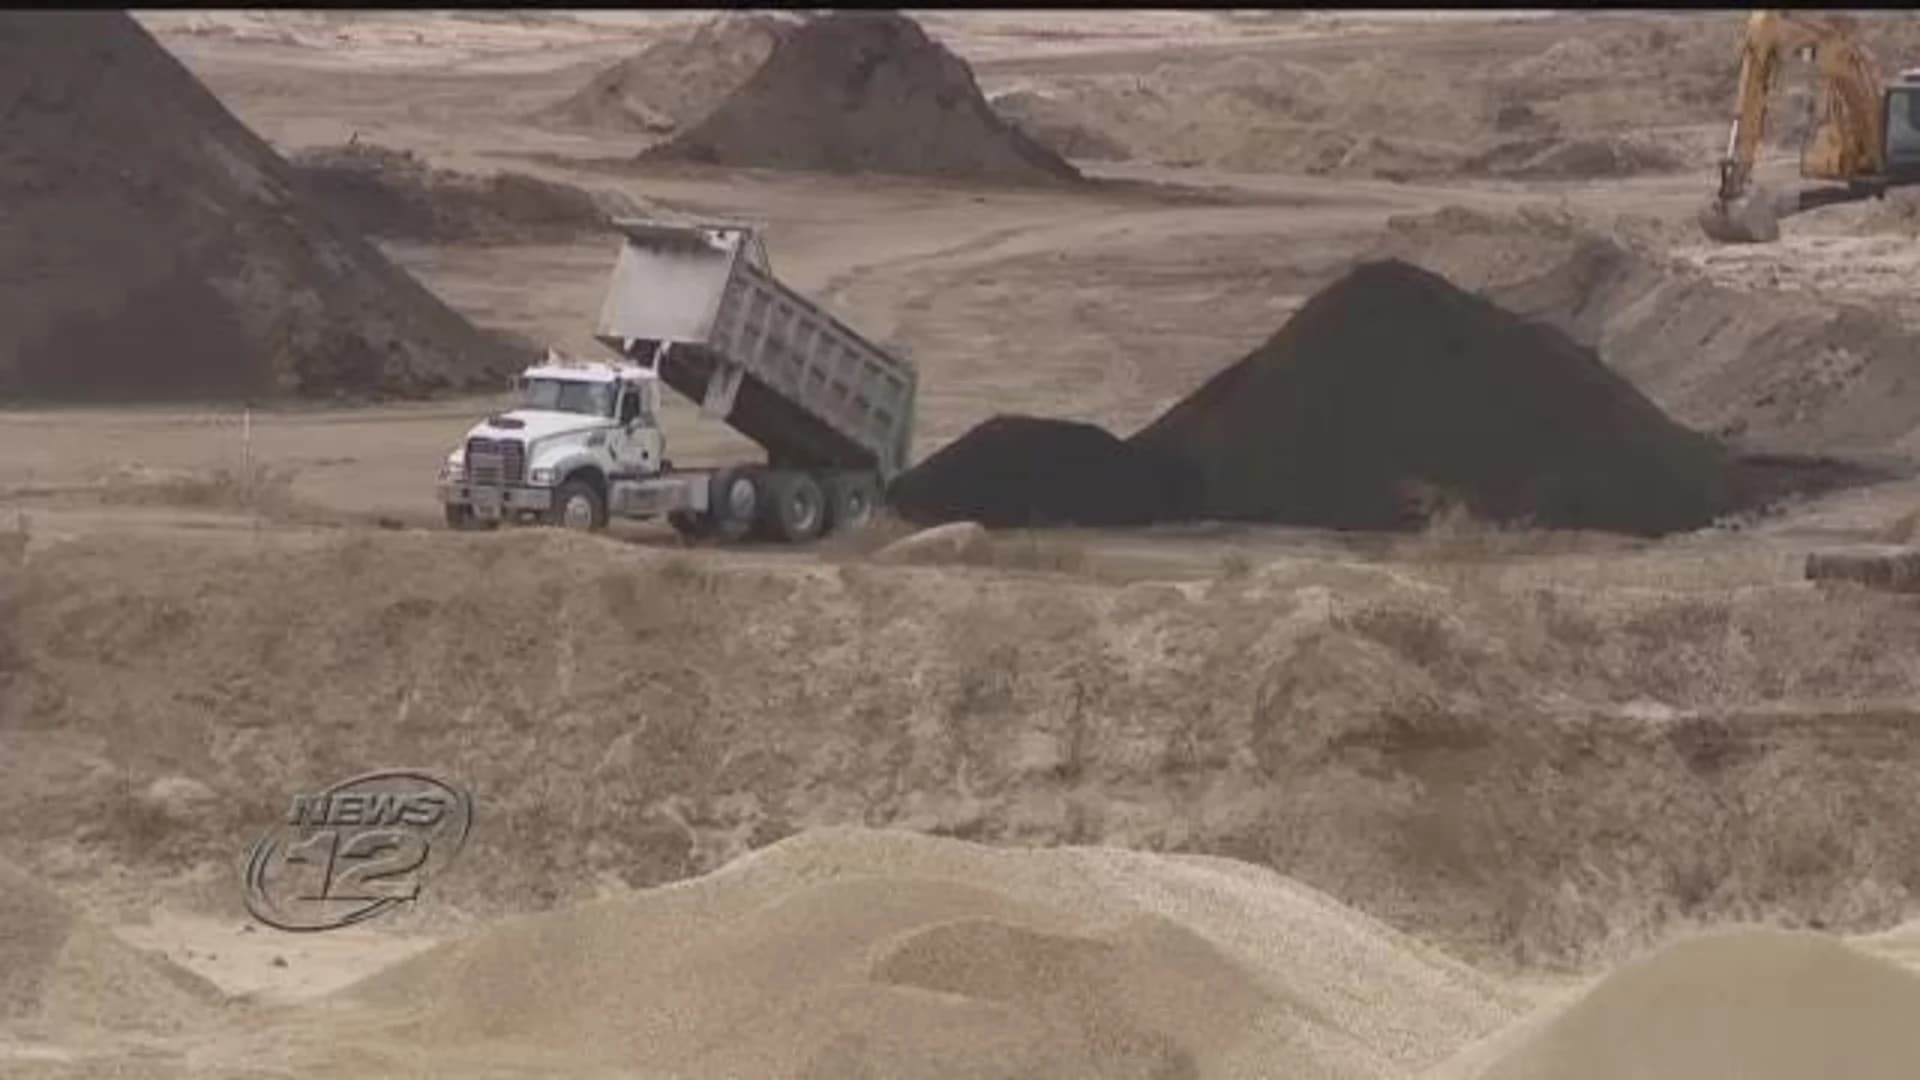 Groups call for Gov. Cuomo to shut down Sand Land mine